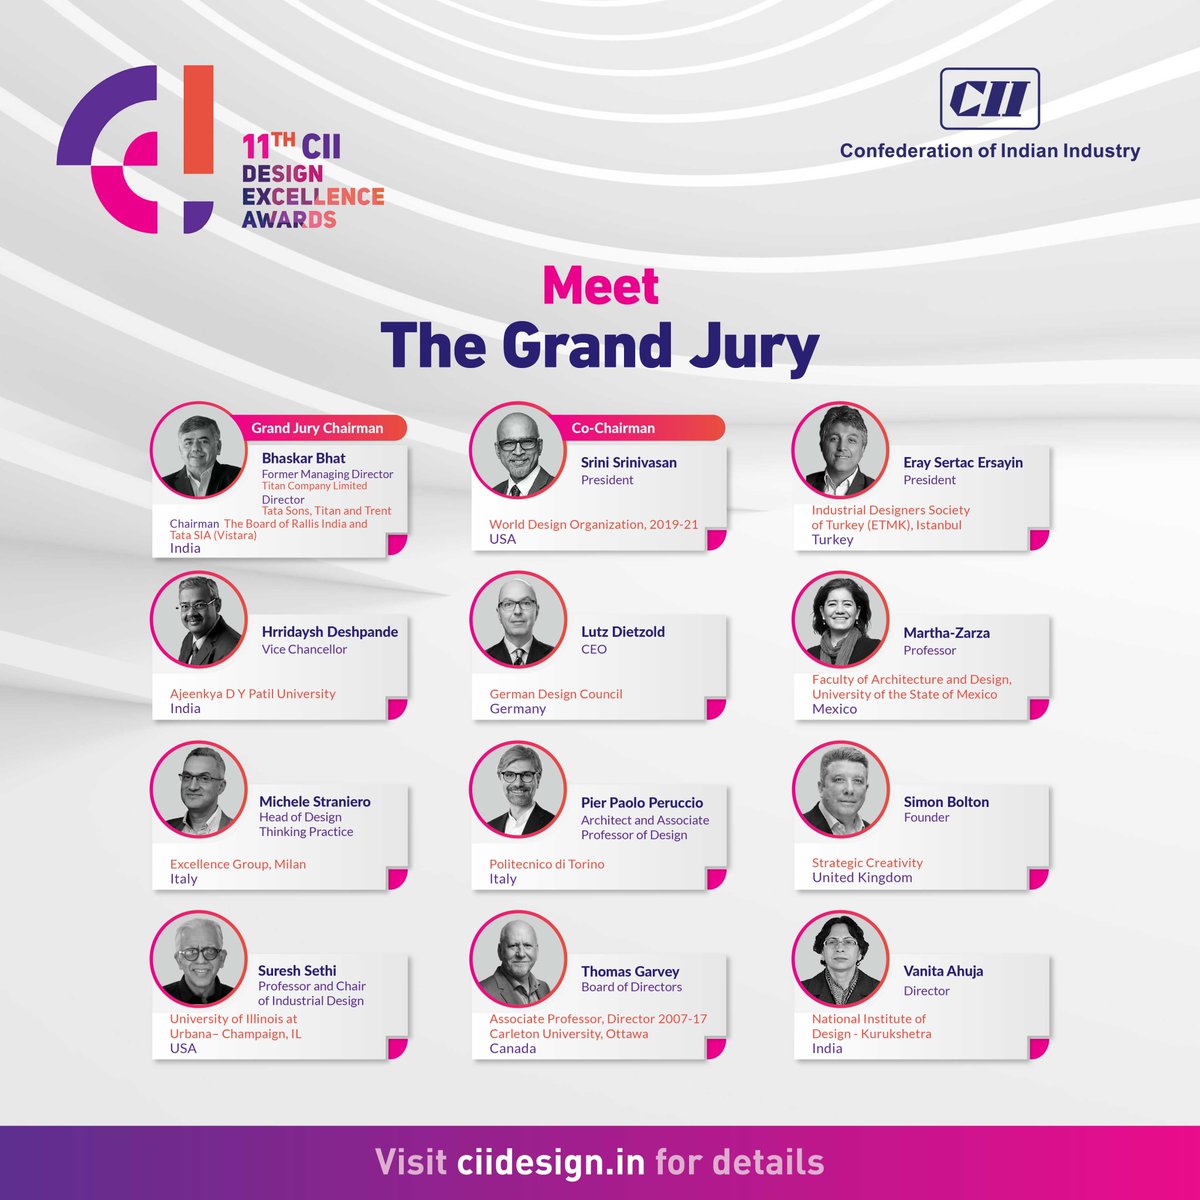 Meet the Grand Jury members of the CII Design Excellence Awards 2021 #designawards @vyas_pradyumna